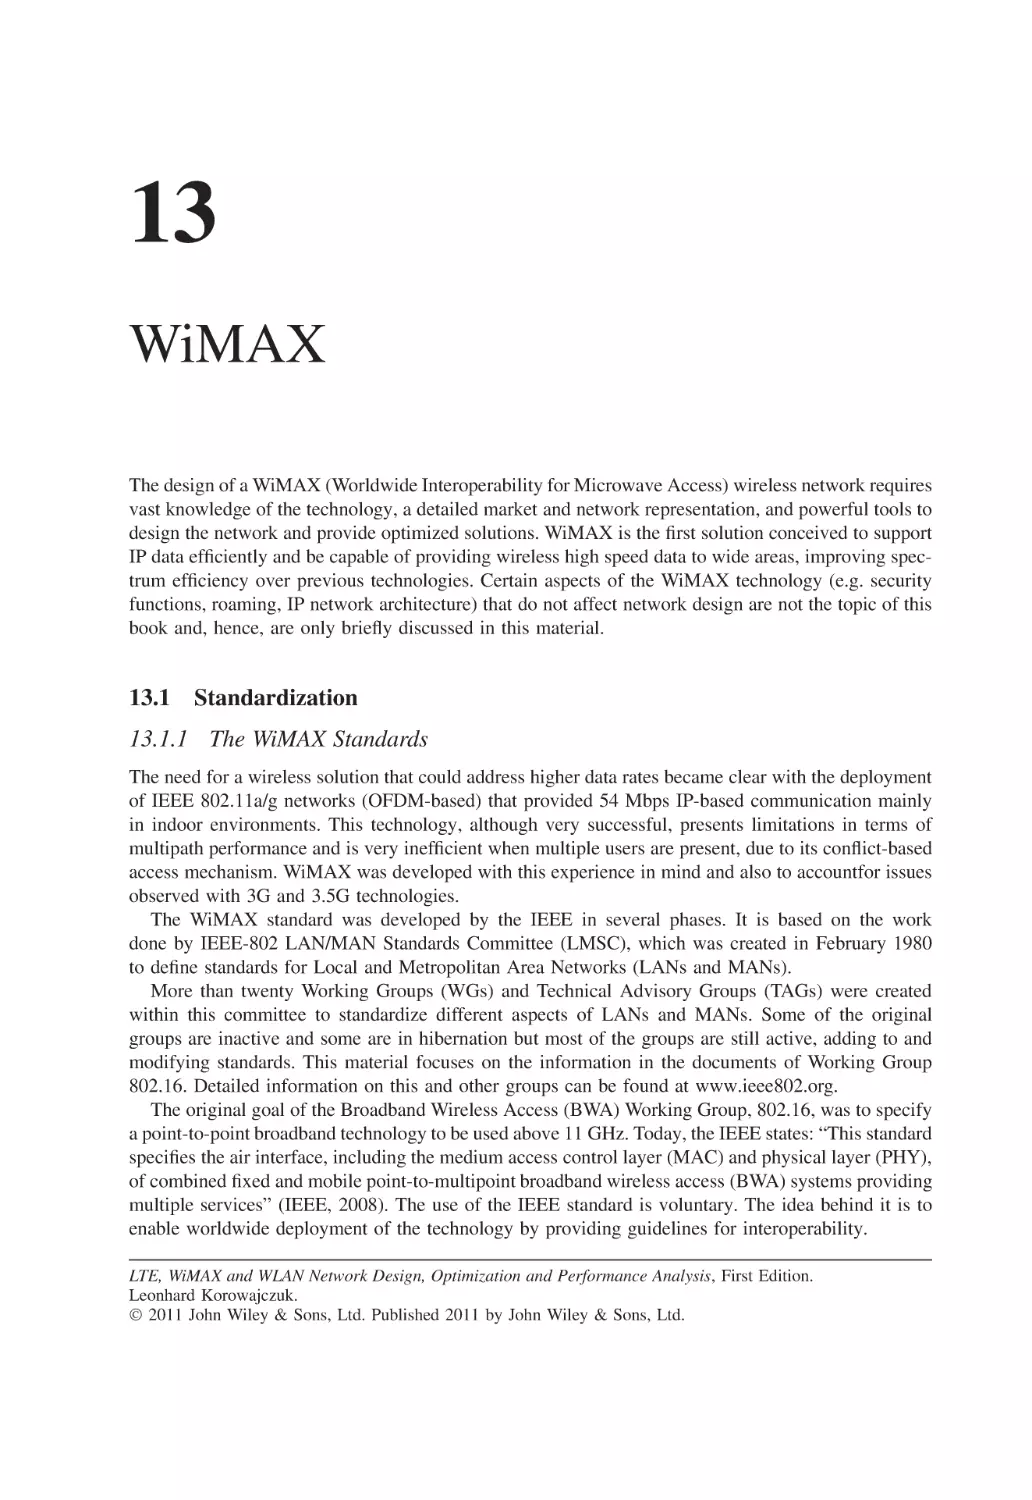 13 WiMAX
13.1 Standardization
13.1.1 The WiMAX Standards